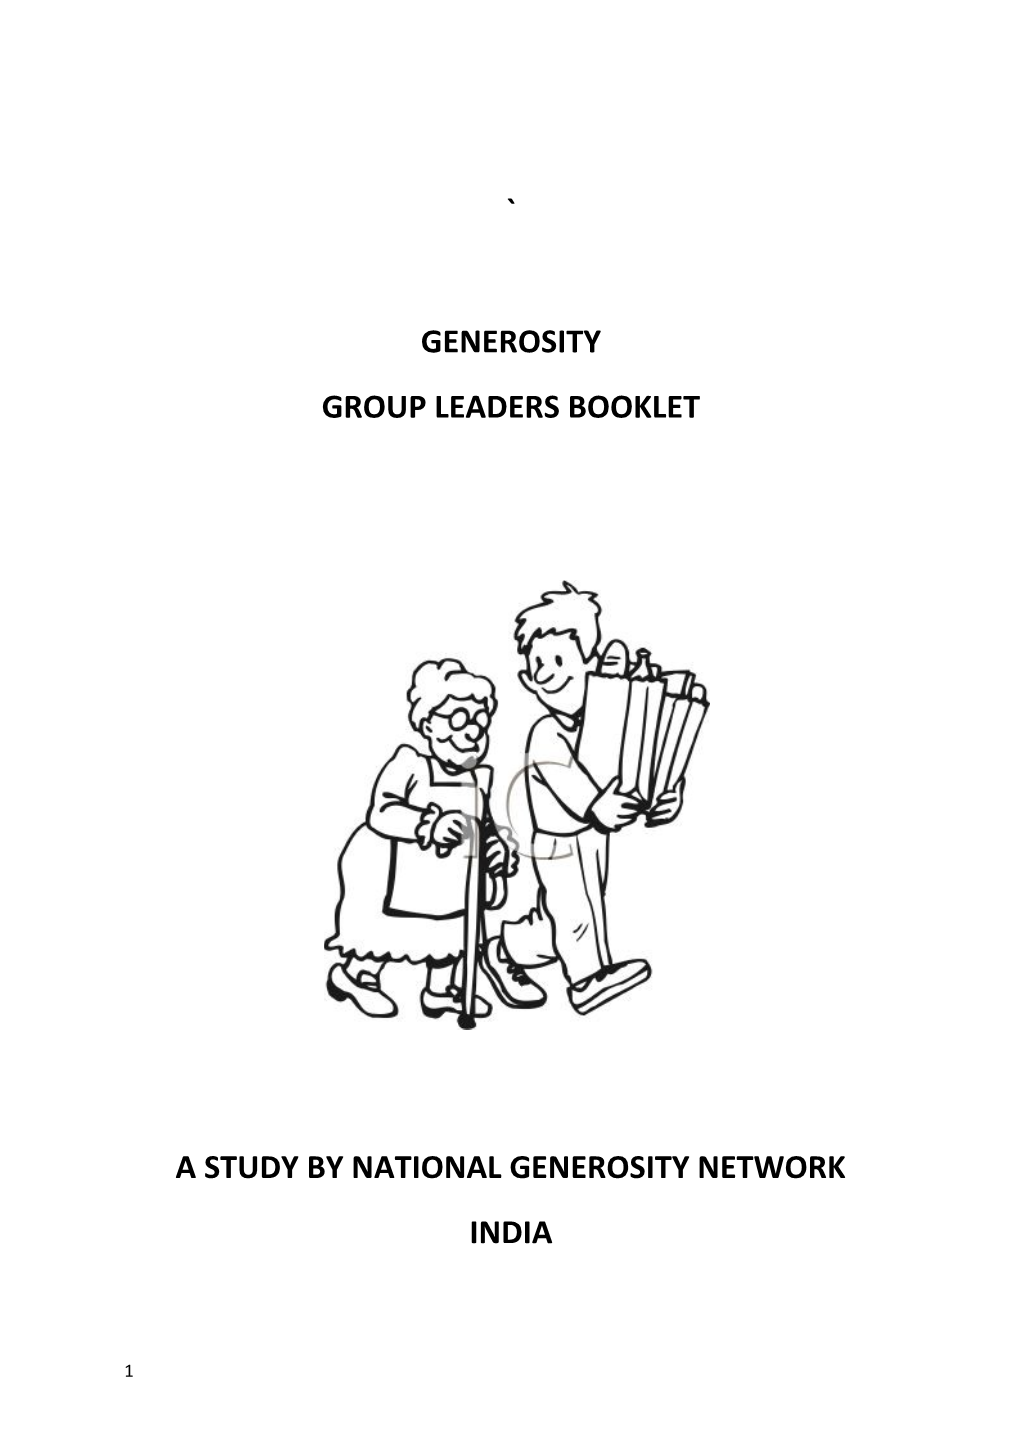 A Study by National Generosity Network